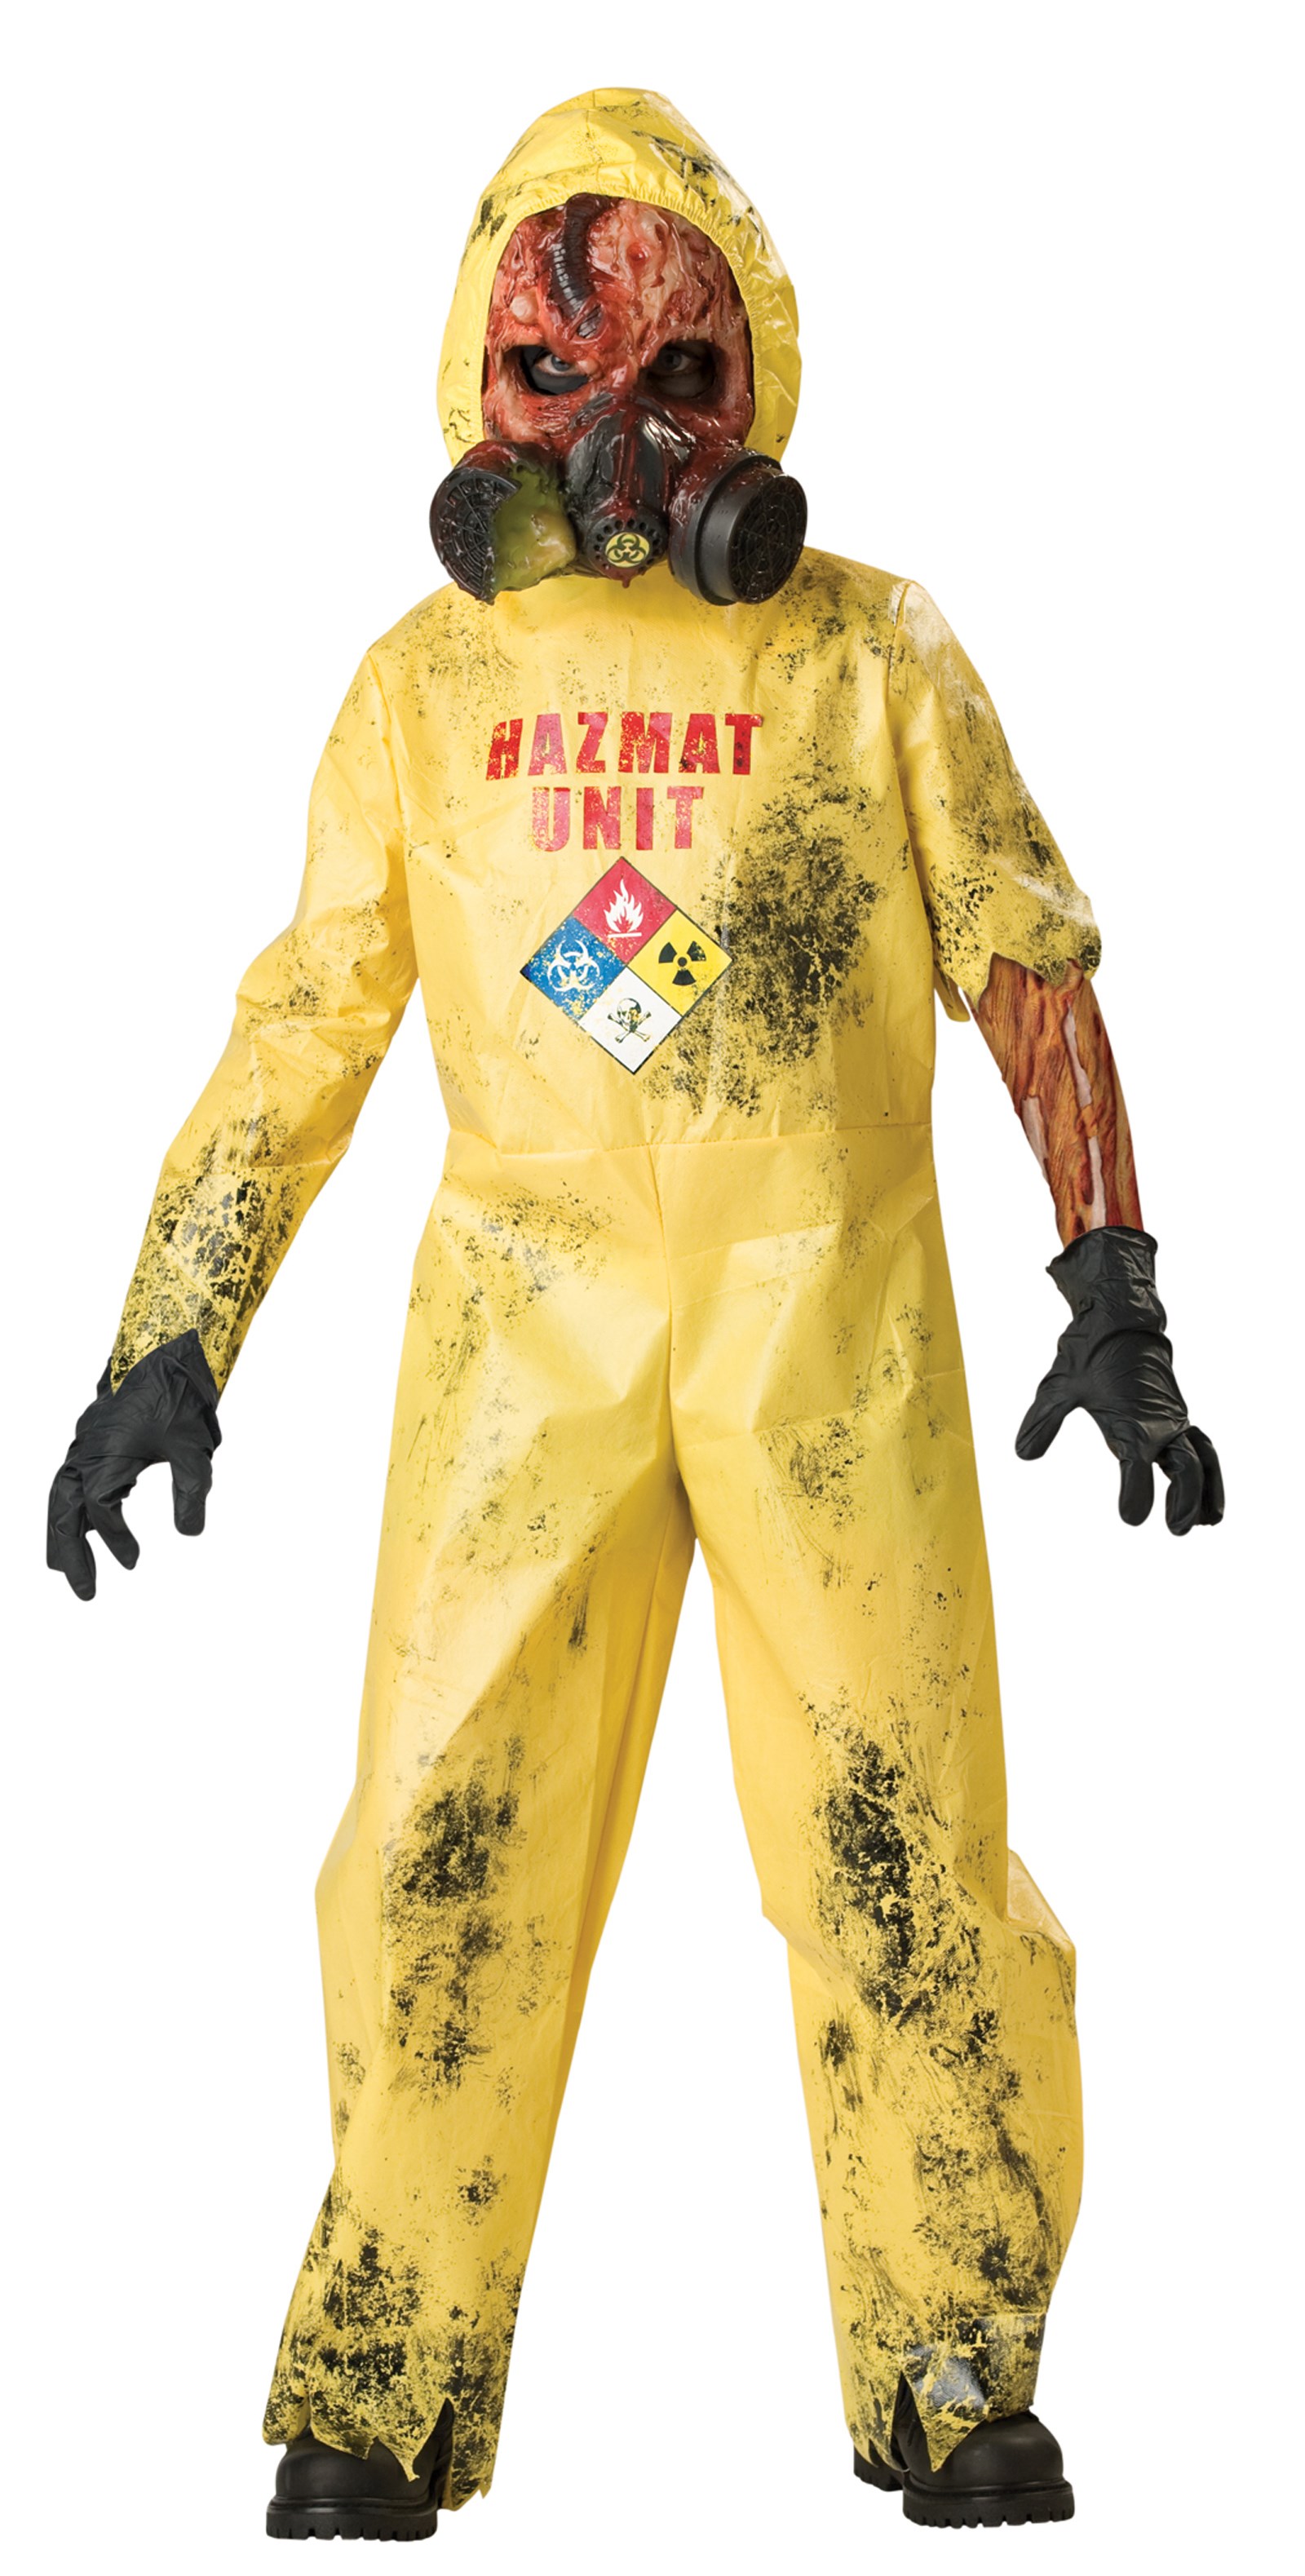 Hazmat Hazard Child Costume